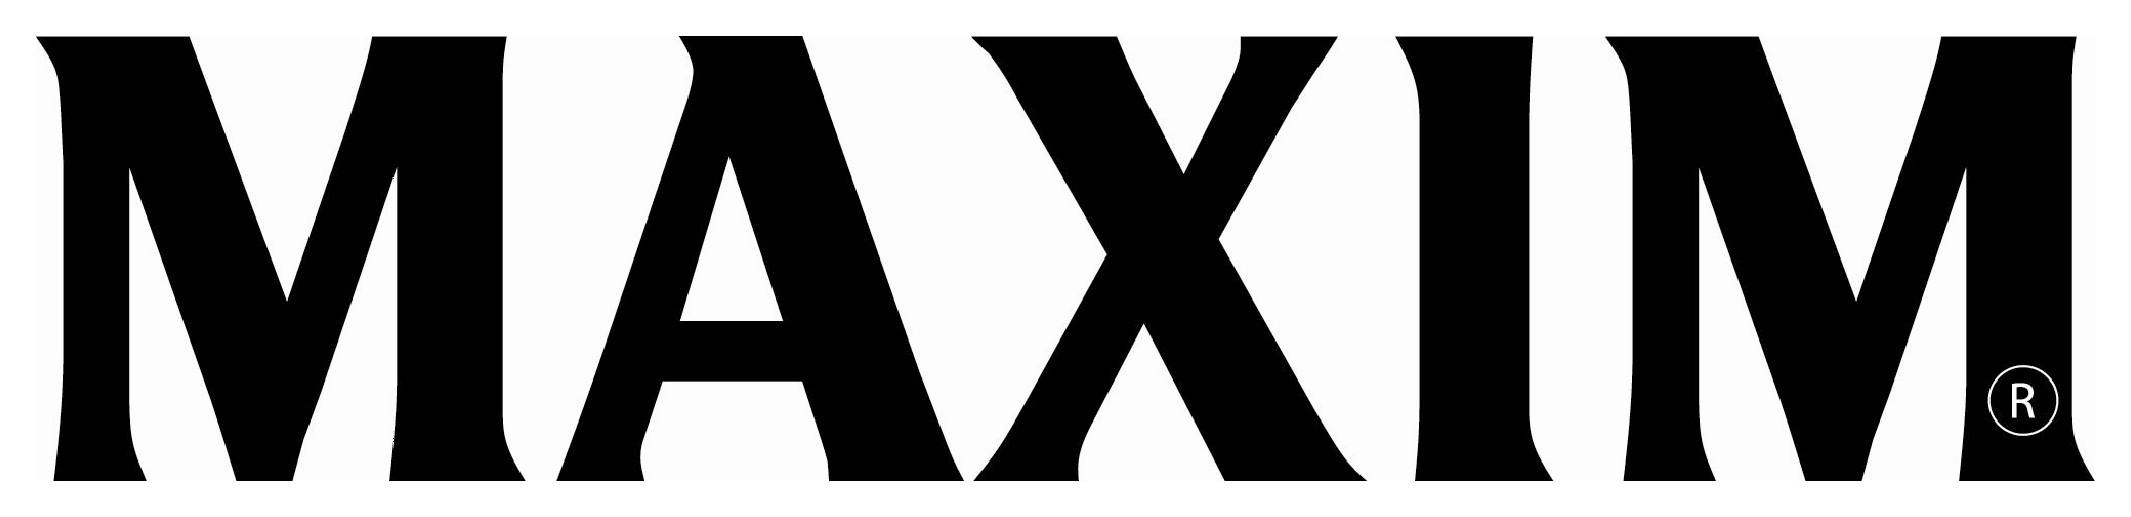 maxim_logo.jpg